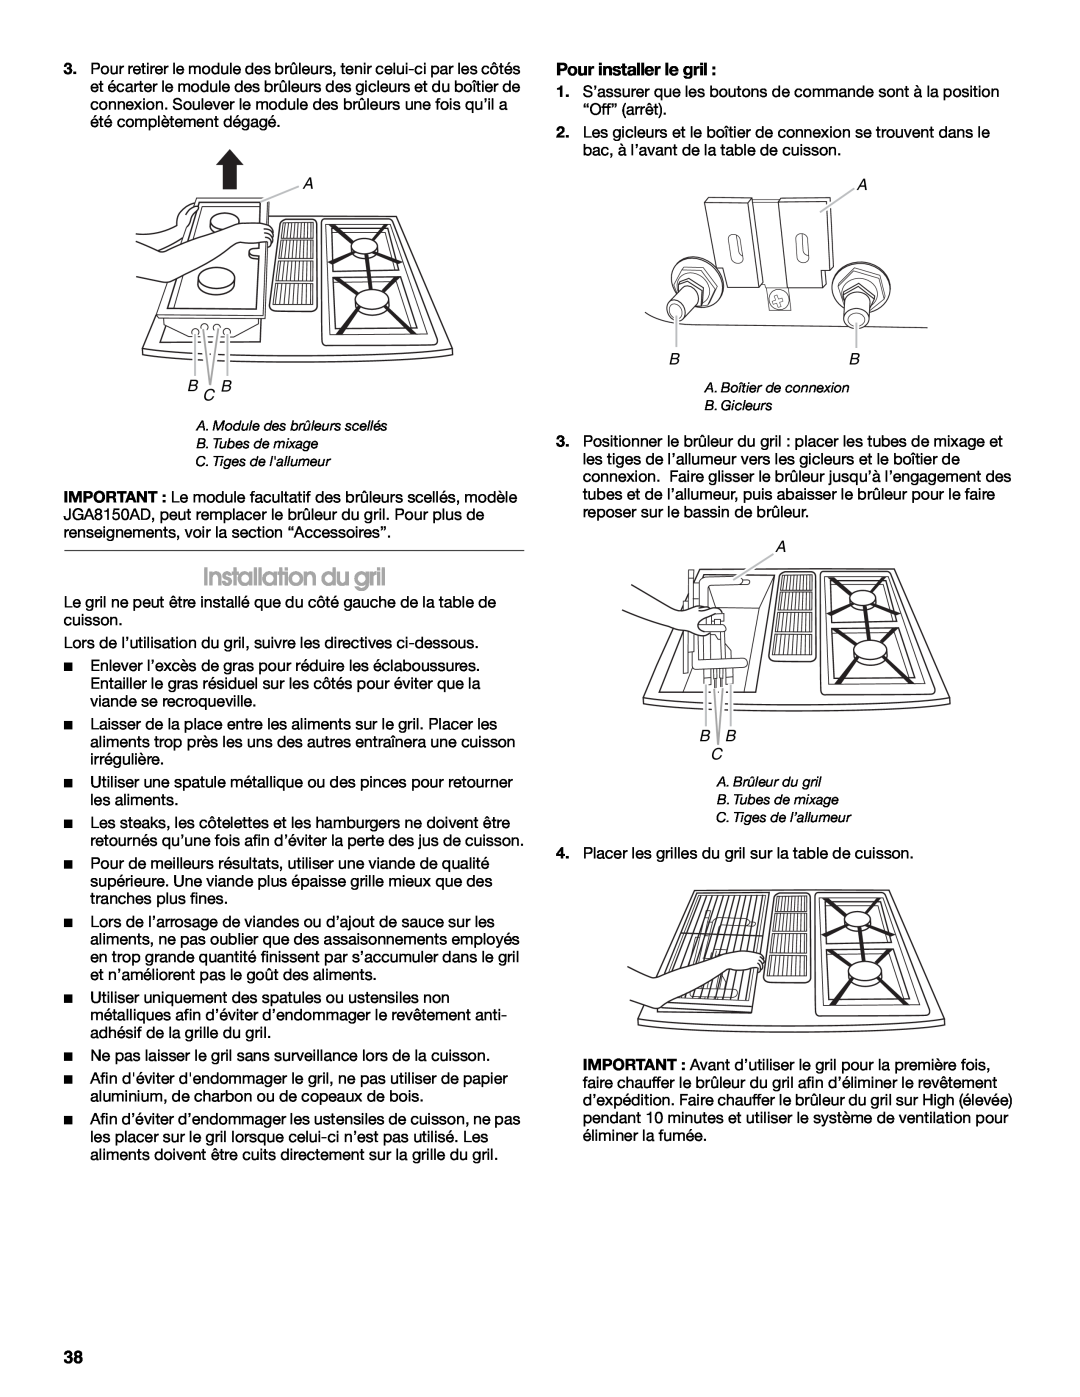 Jenn-Air JD59860 manual Installation du gril, Pour installer le gril, A B C B, A Bb, A B B C 